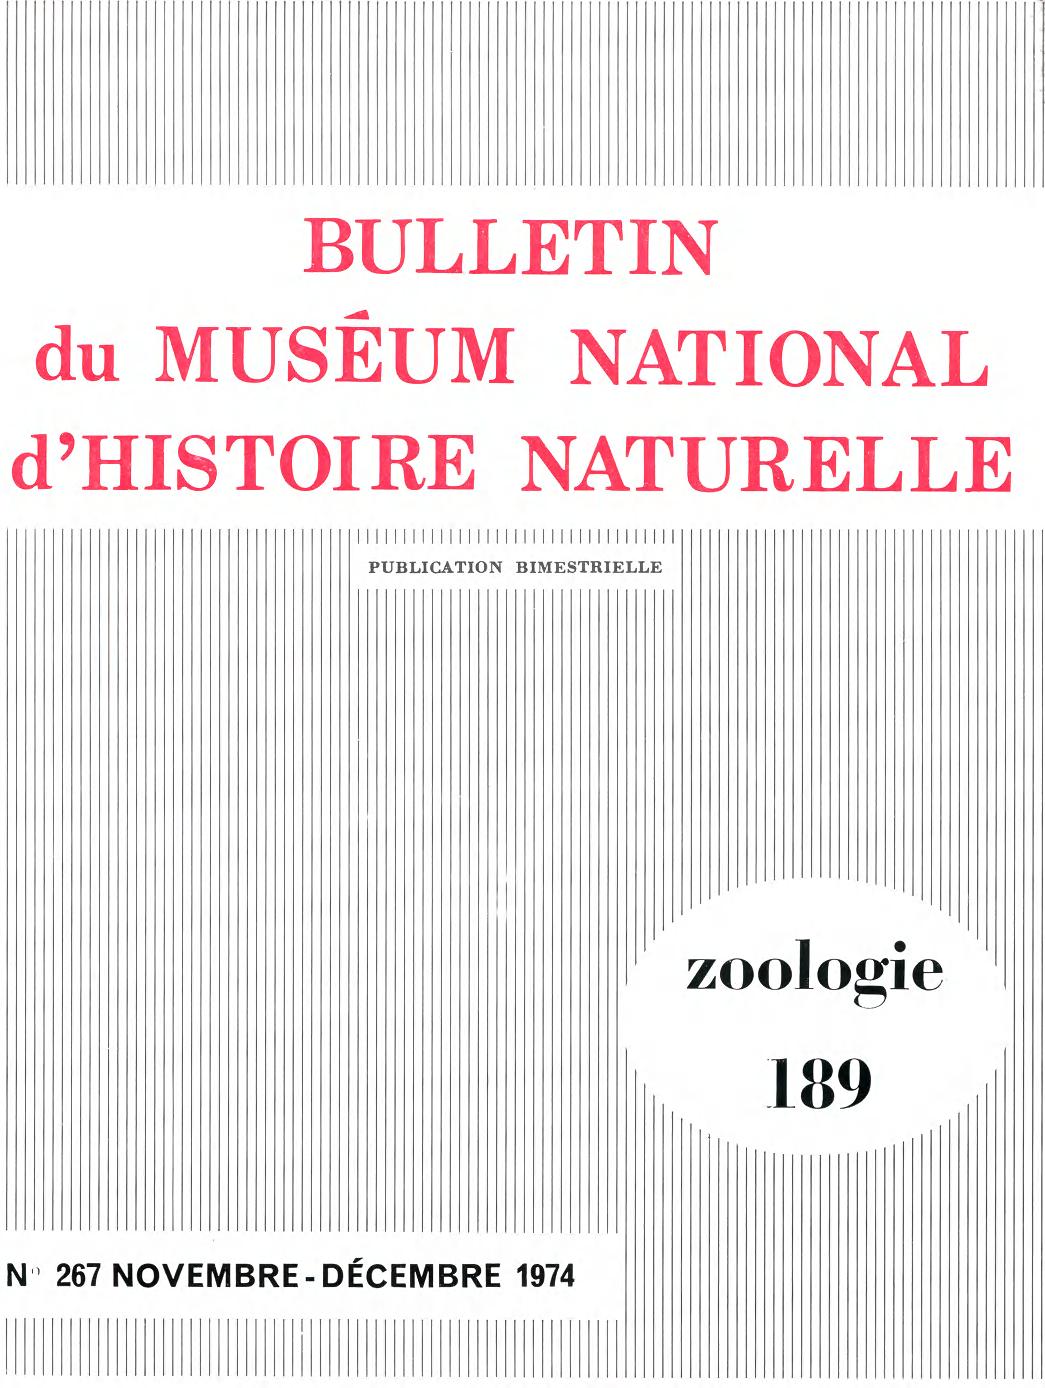 Media type: text; Brygoo and Domergue 1974 Description: Bulletin du Museum National d'Histoire Naturelle, Zoologie 189, series 3e, no. 267;